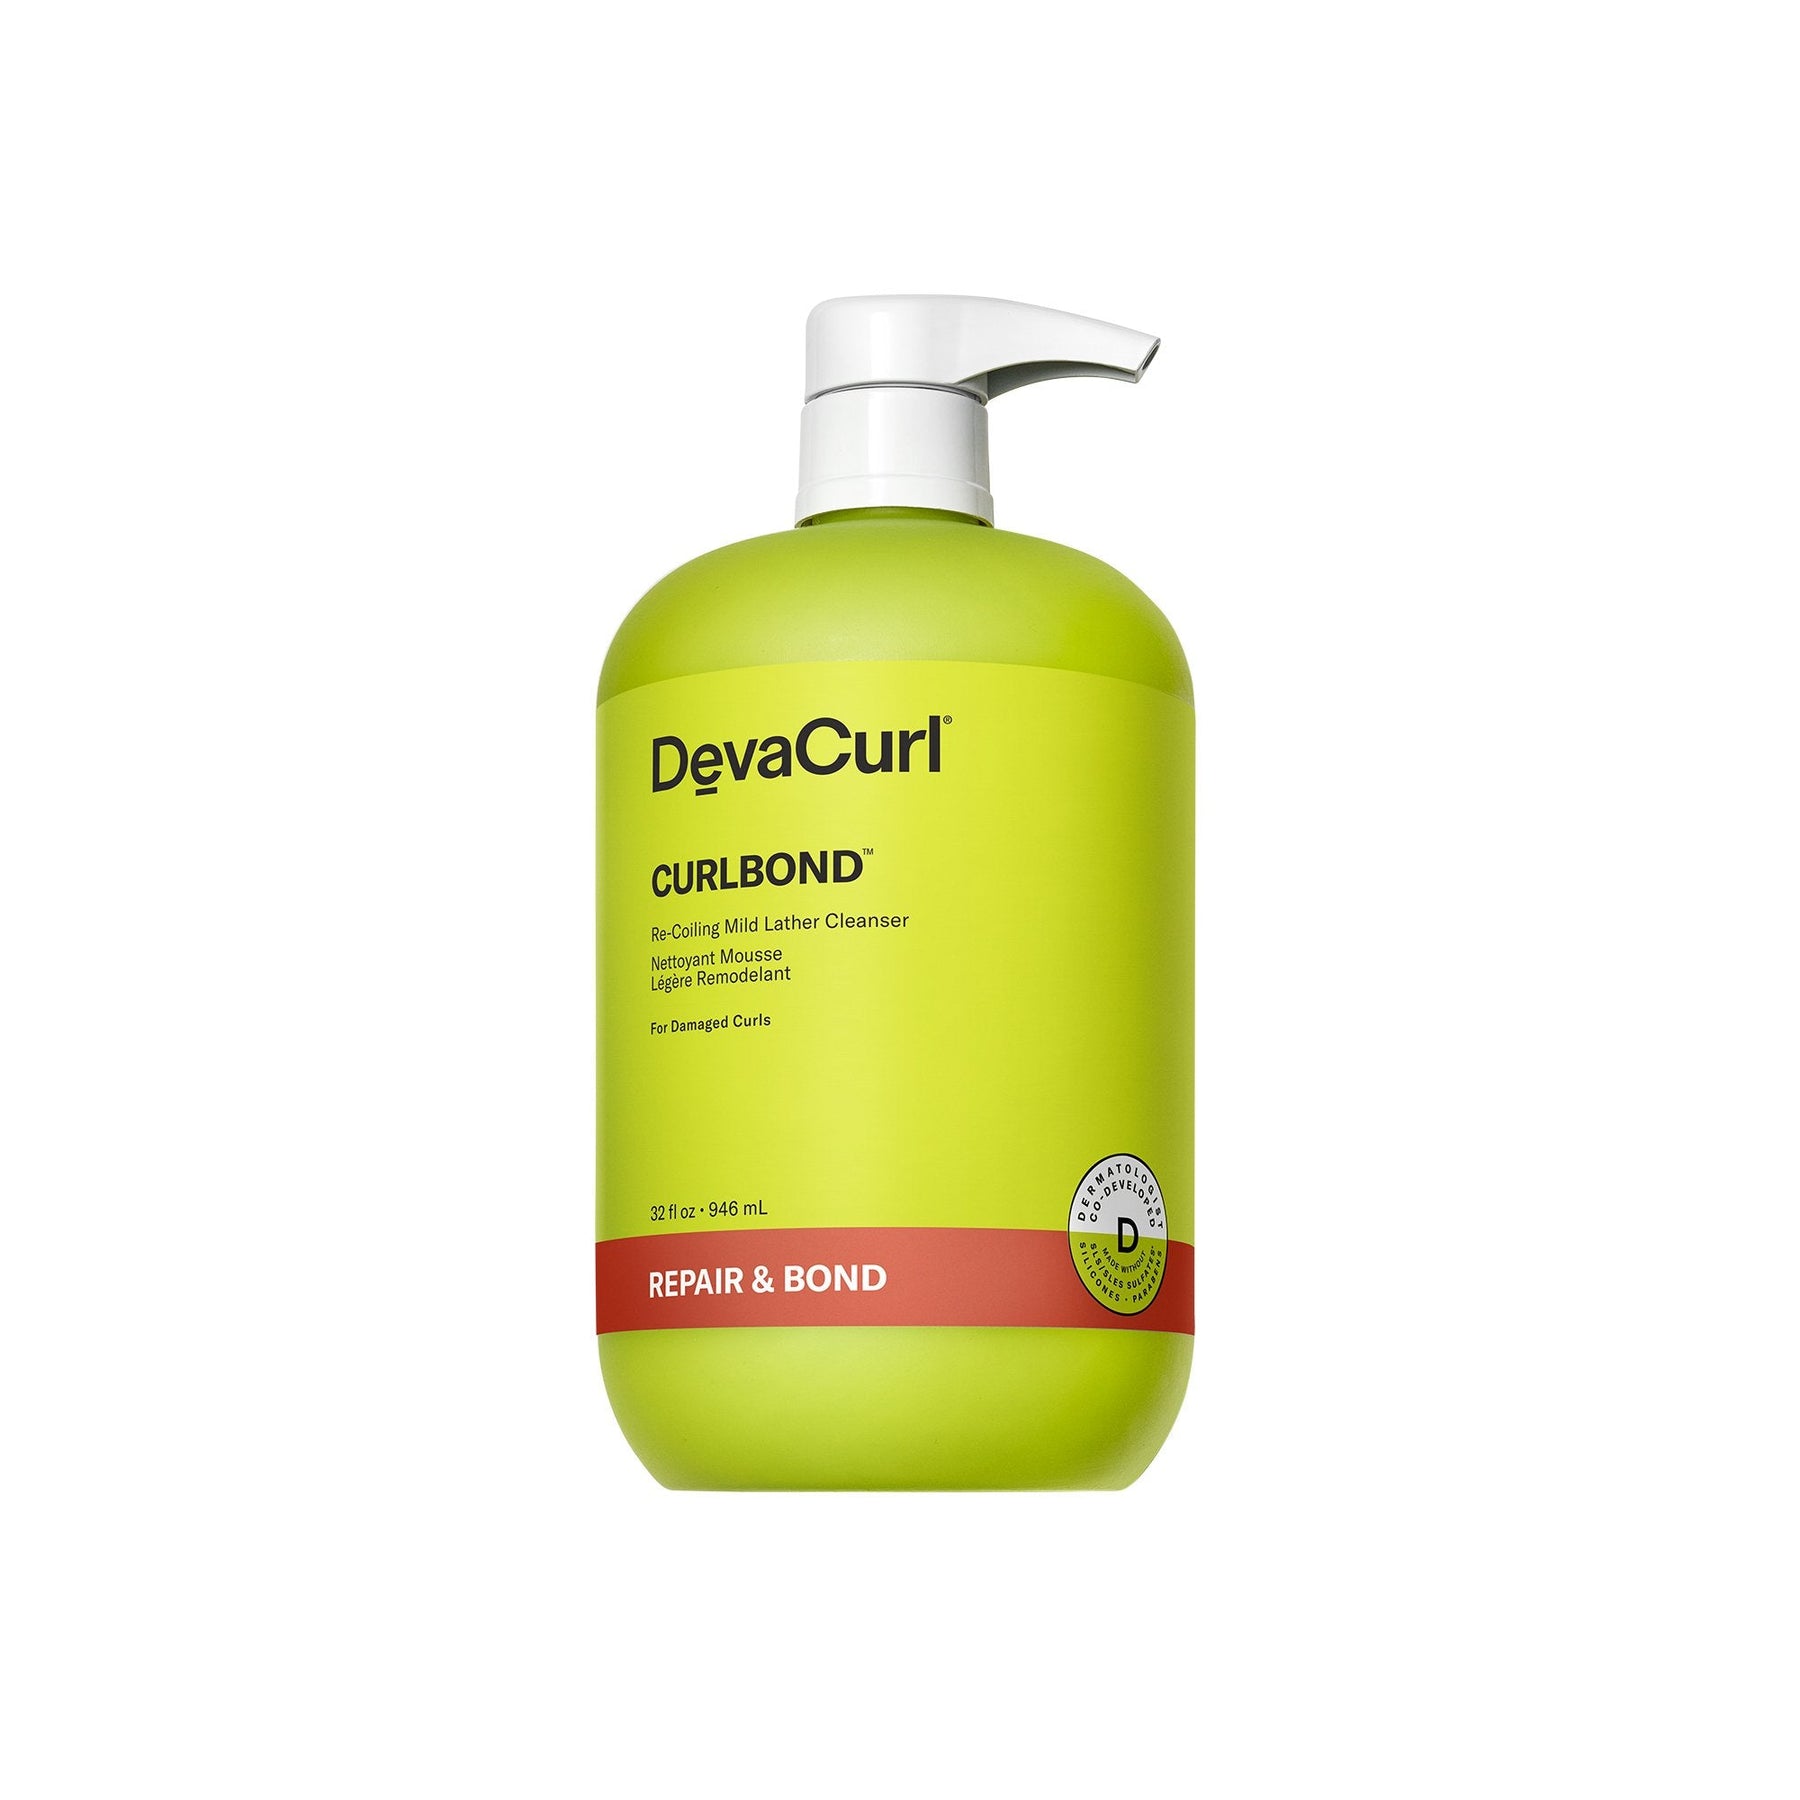 New! DevaCurl CurlBond Cleanser - 32oz - by Deva Curl |ProCare Outlet|